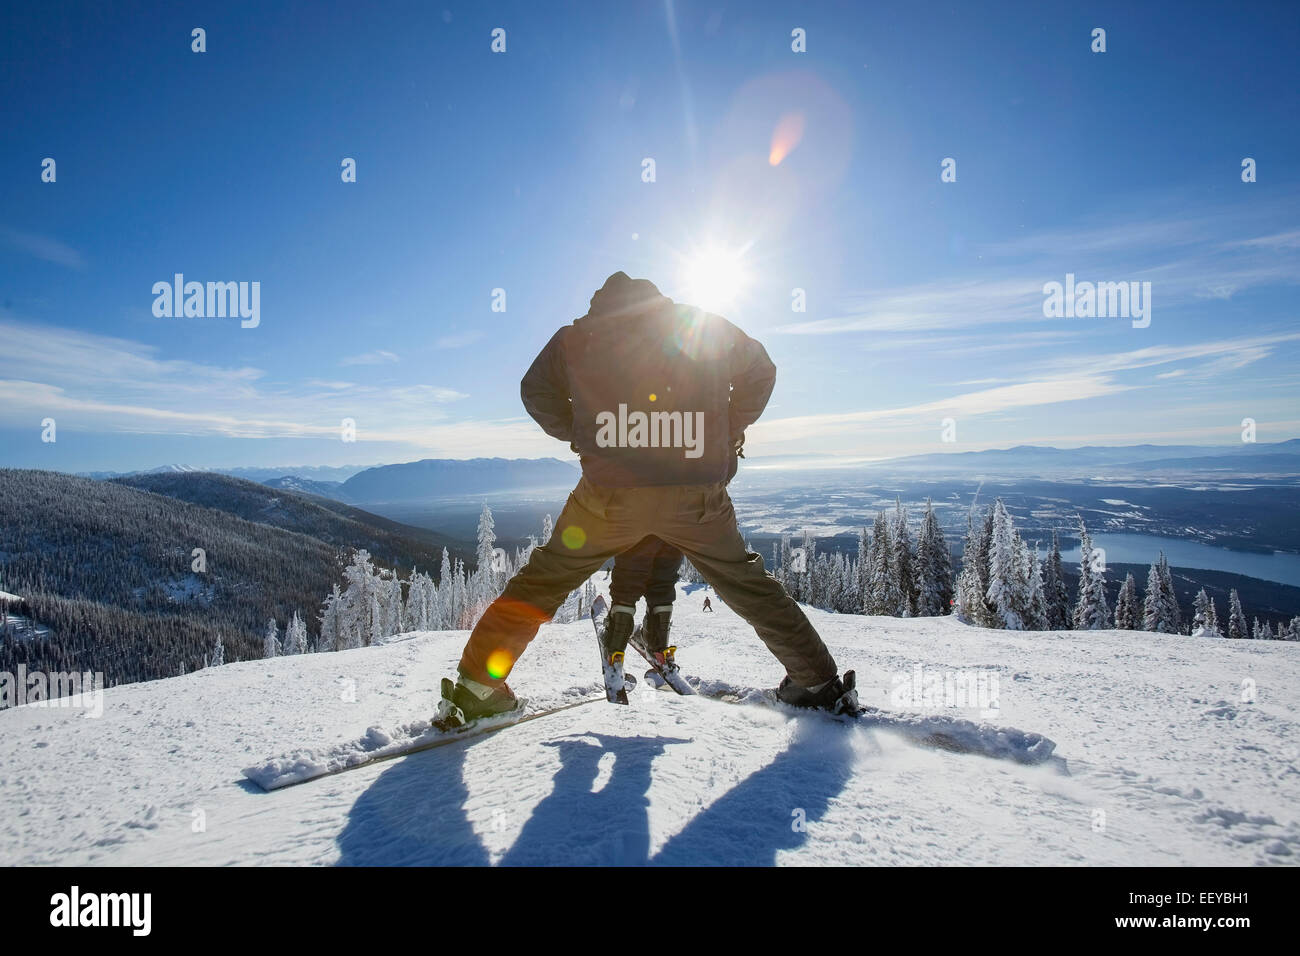 USA, Montana, Whitefish, Father skiing with son (6-7) Stock Photo